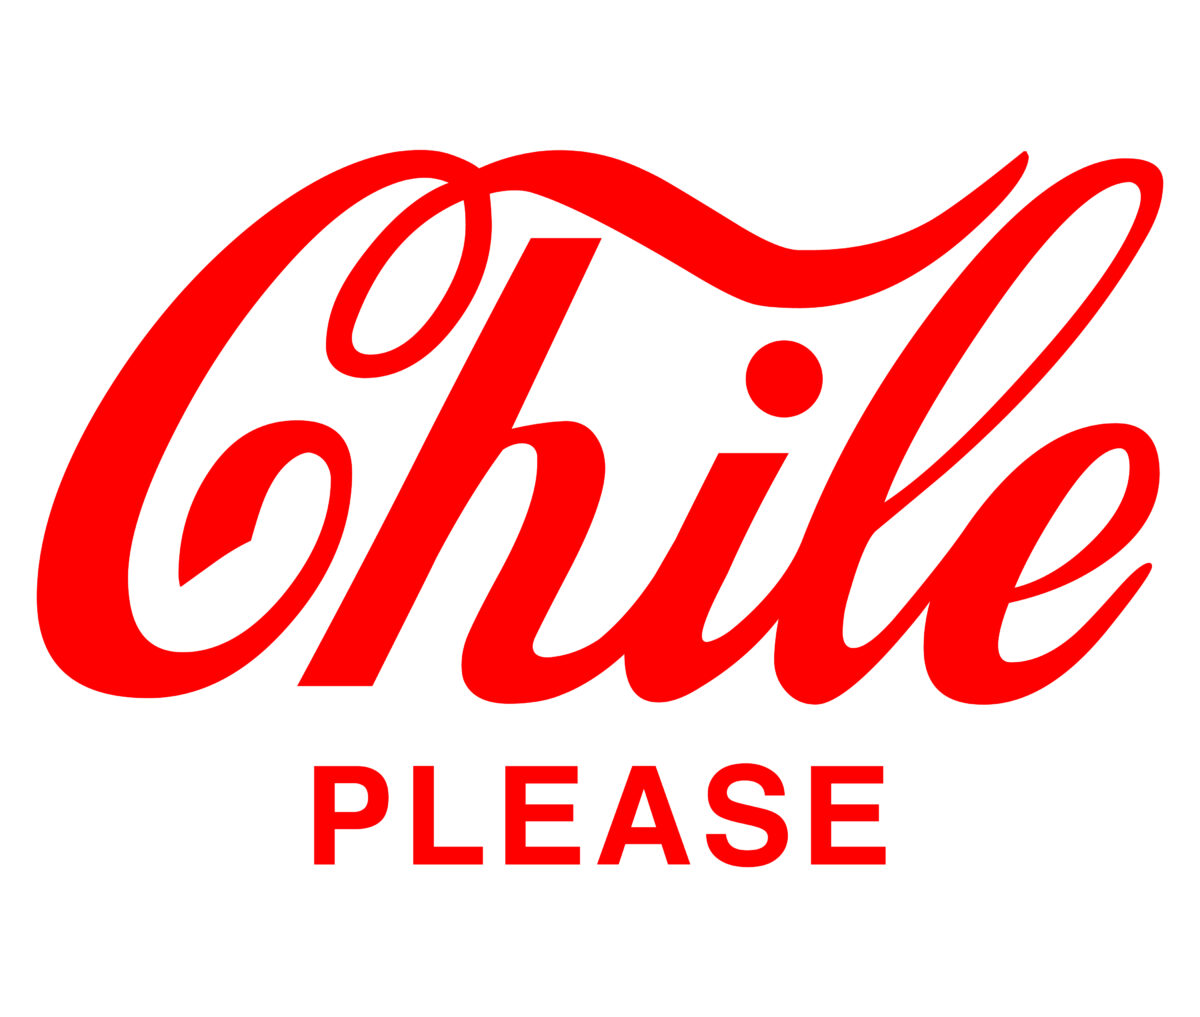 Chile please Svg